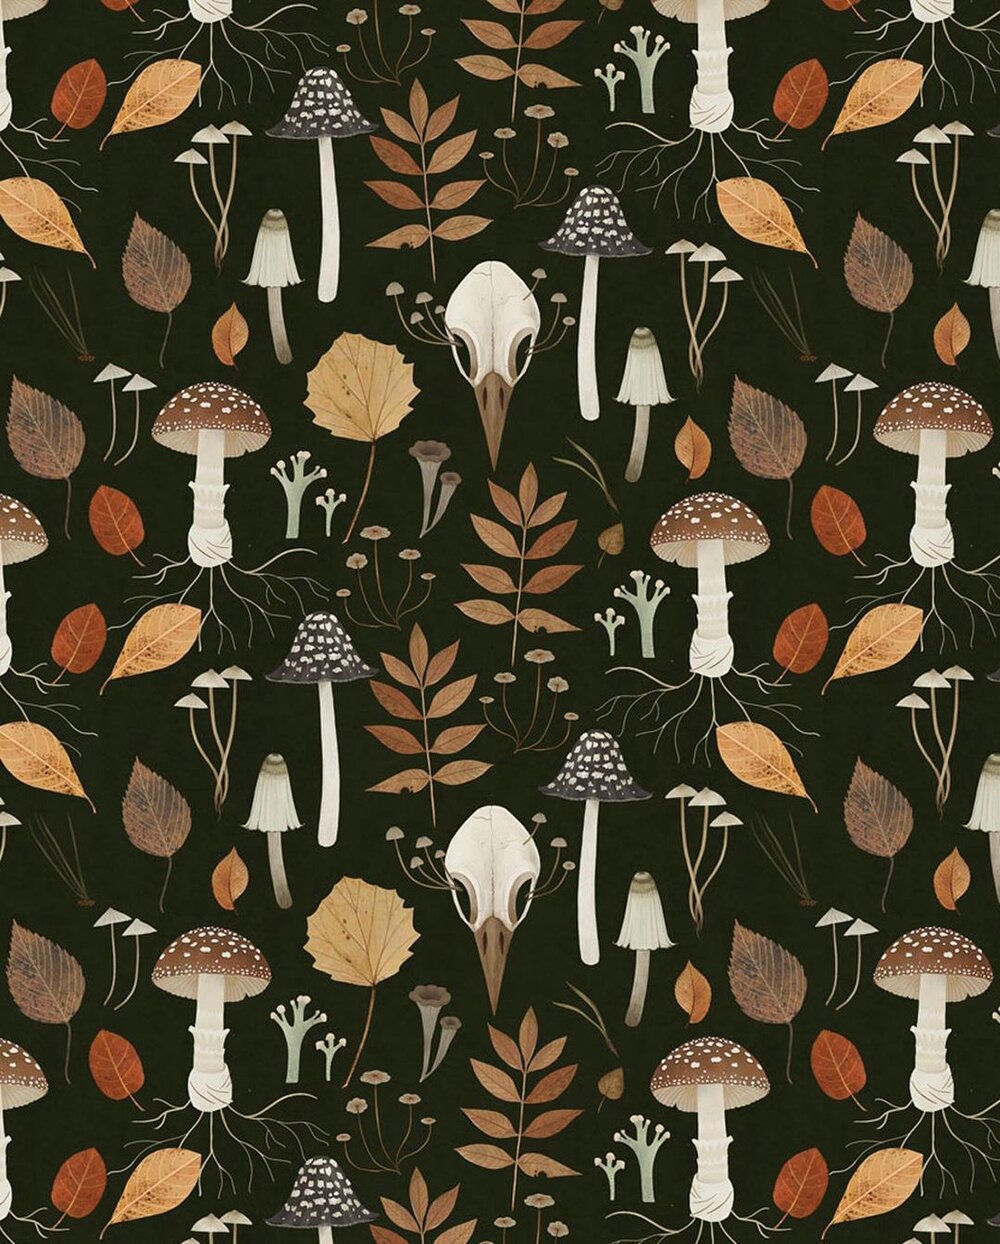 Aesthetic Mushrooms wallpaper by me1347  Download on ZEDGE  7ea1